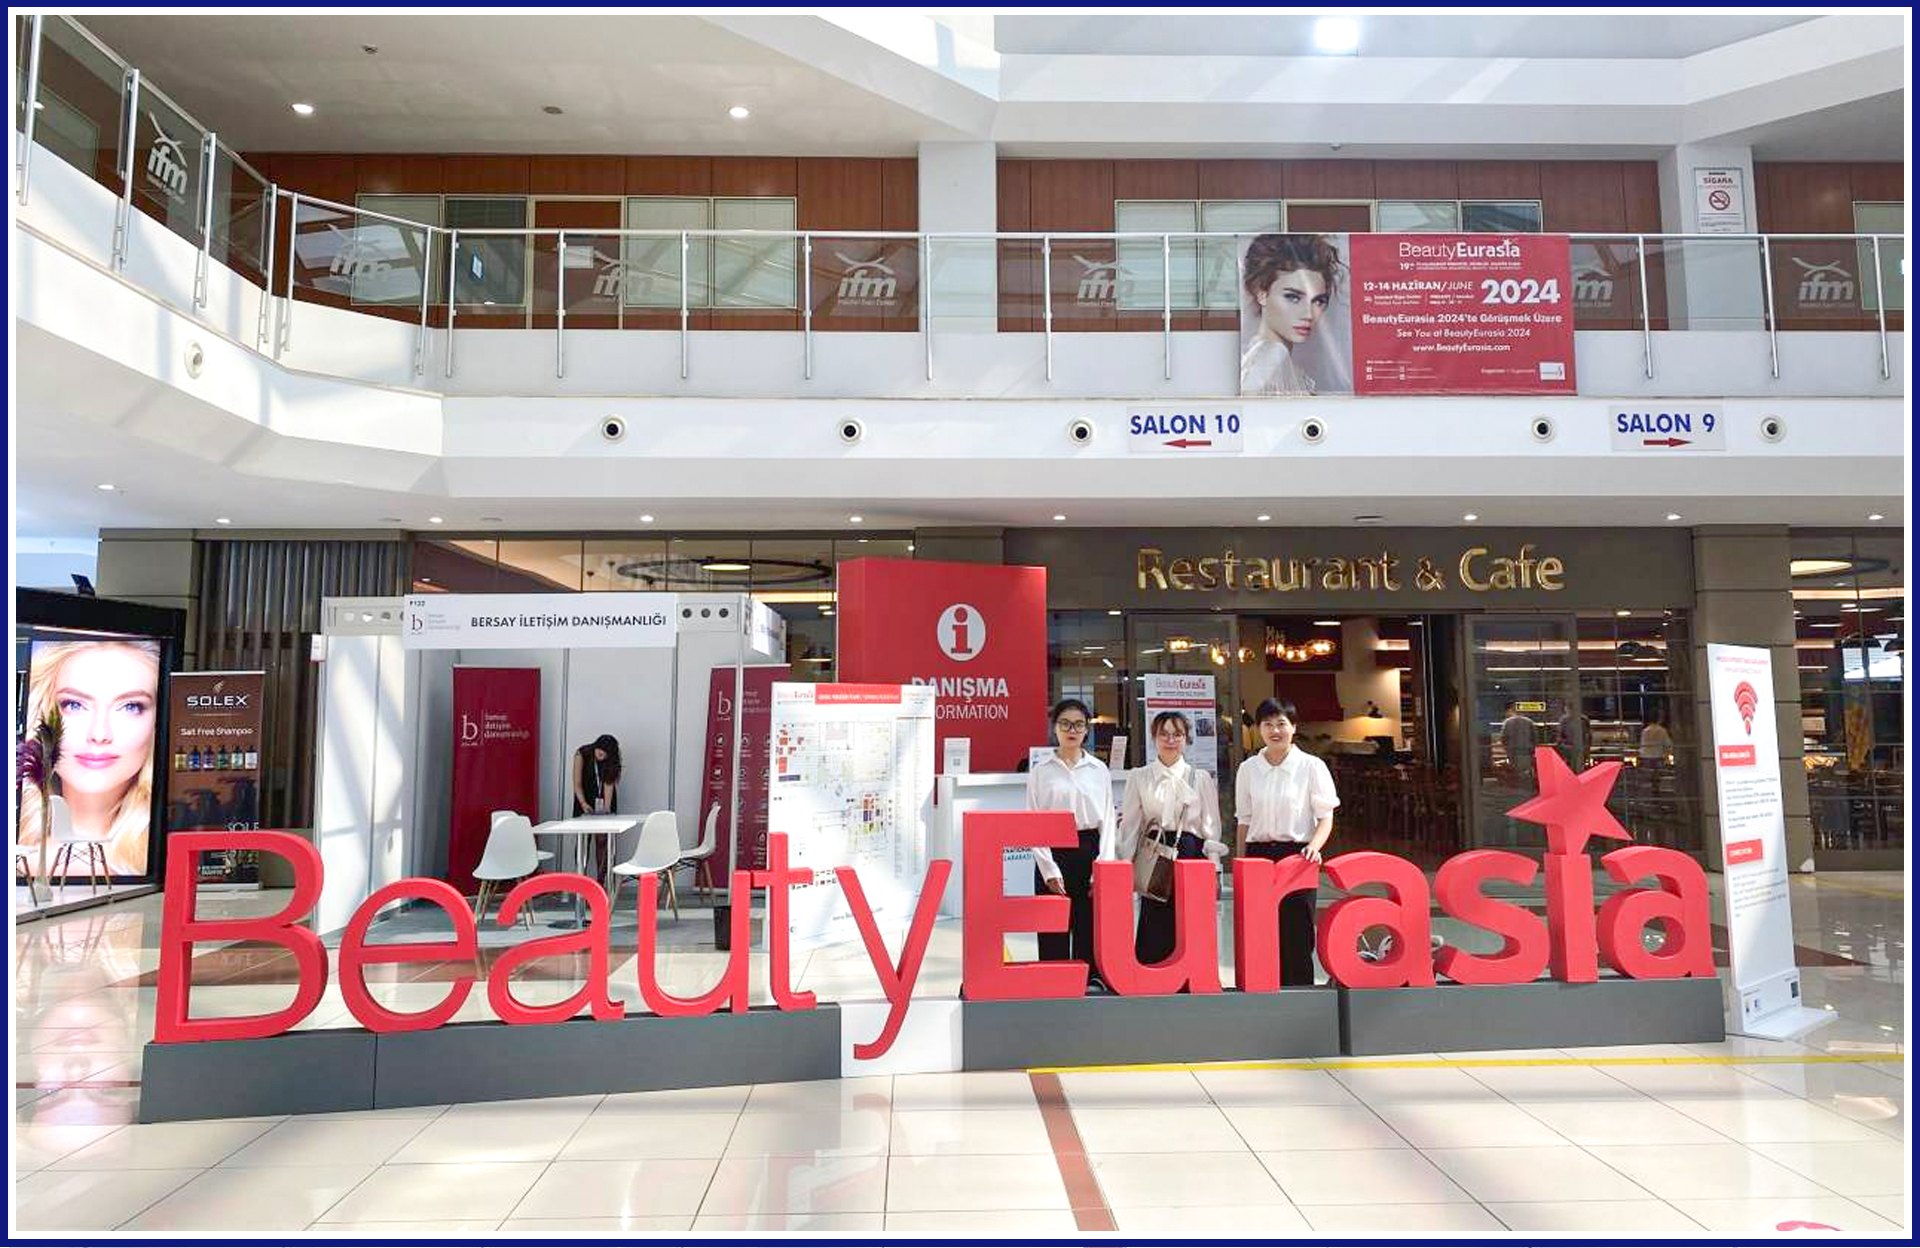 SEA HEART GROUP Shines at the Prestigious Beauty Exhibition in Turkey, Showcasing Innovative Beauty Devices